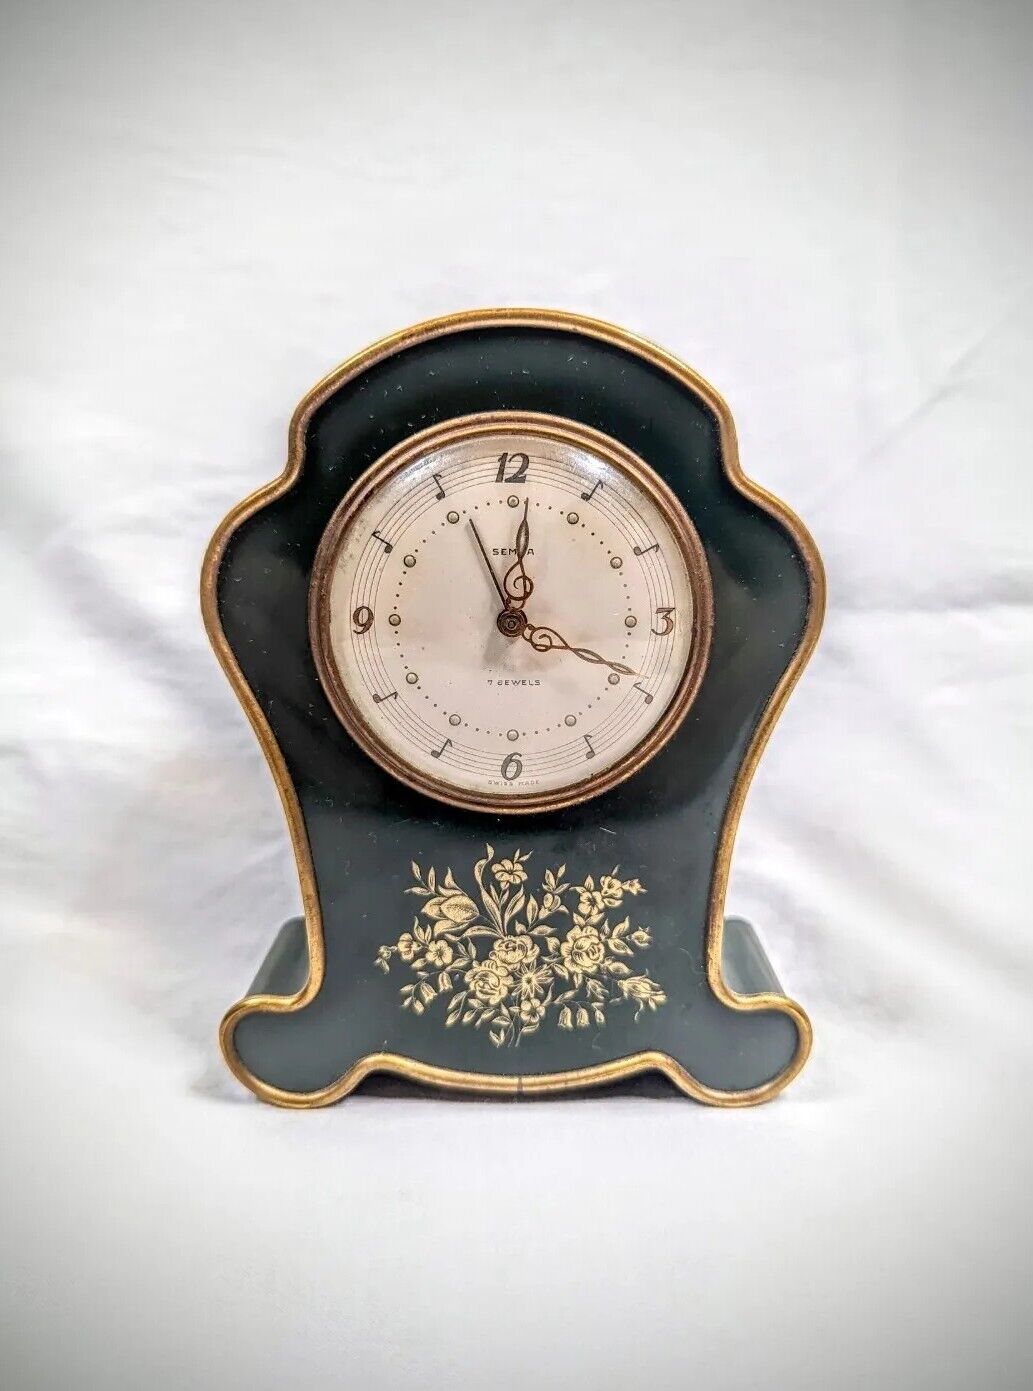 Rare Clock Semca Brass Desk 7 Jewels Swiss Made Mid Century Vintage Music Alarm